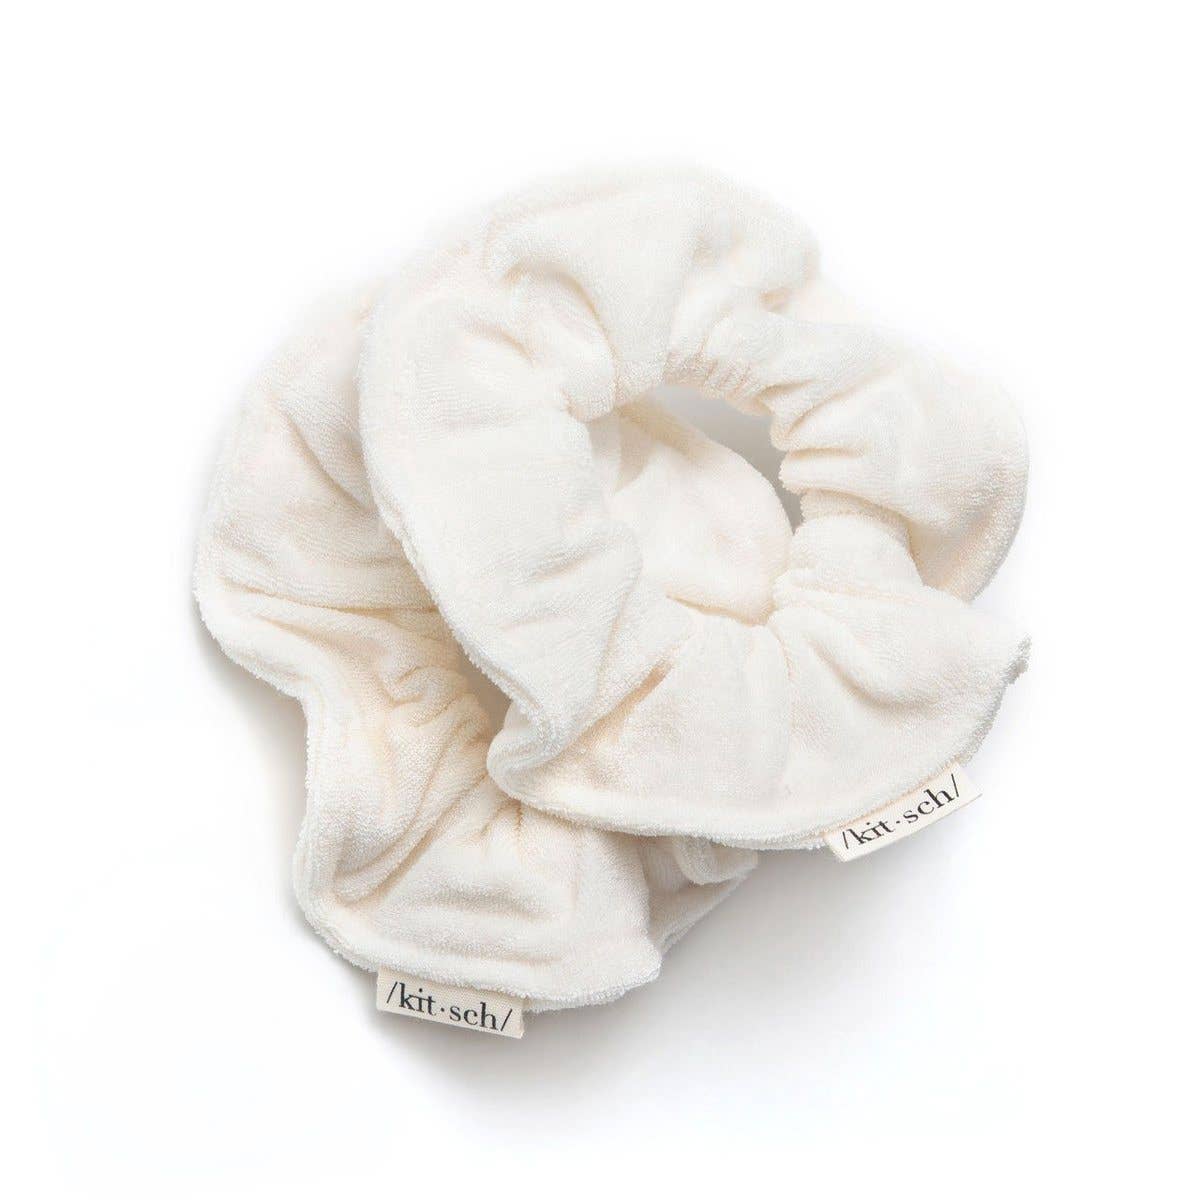 Kitsch -Towel Scrunchie 2 Pack - Eco Friendly White